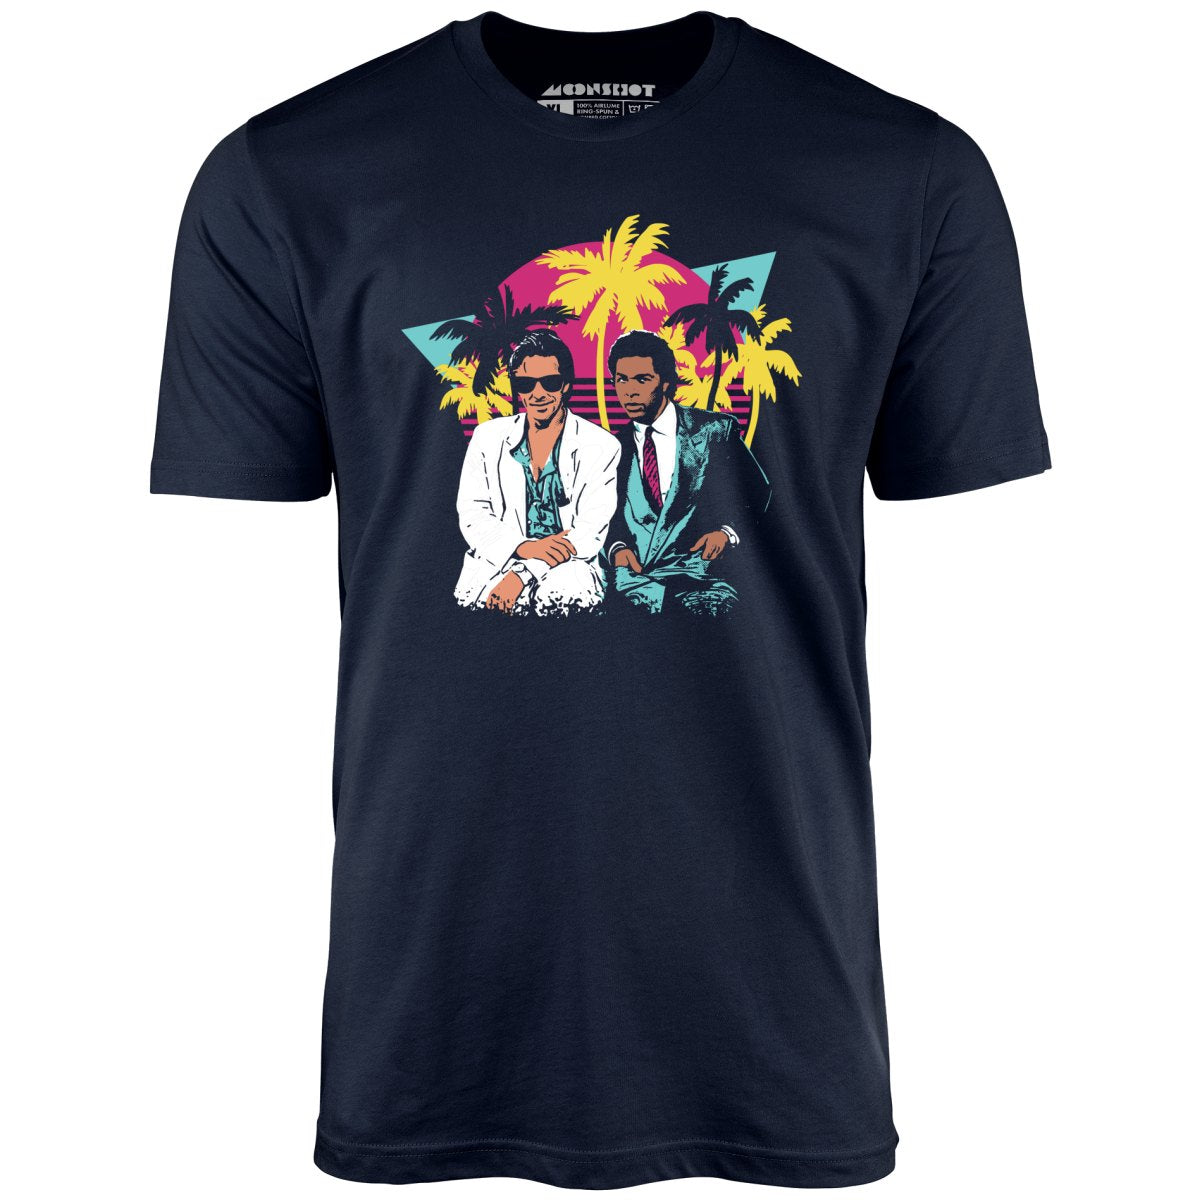 Crockett and Tubbs - Unisex T-Shirt